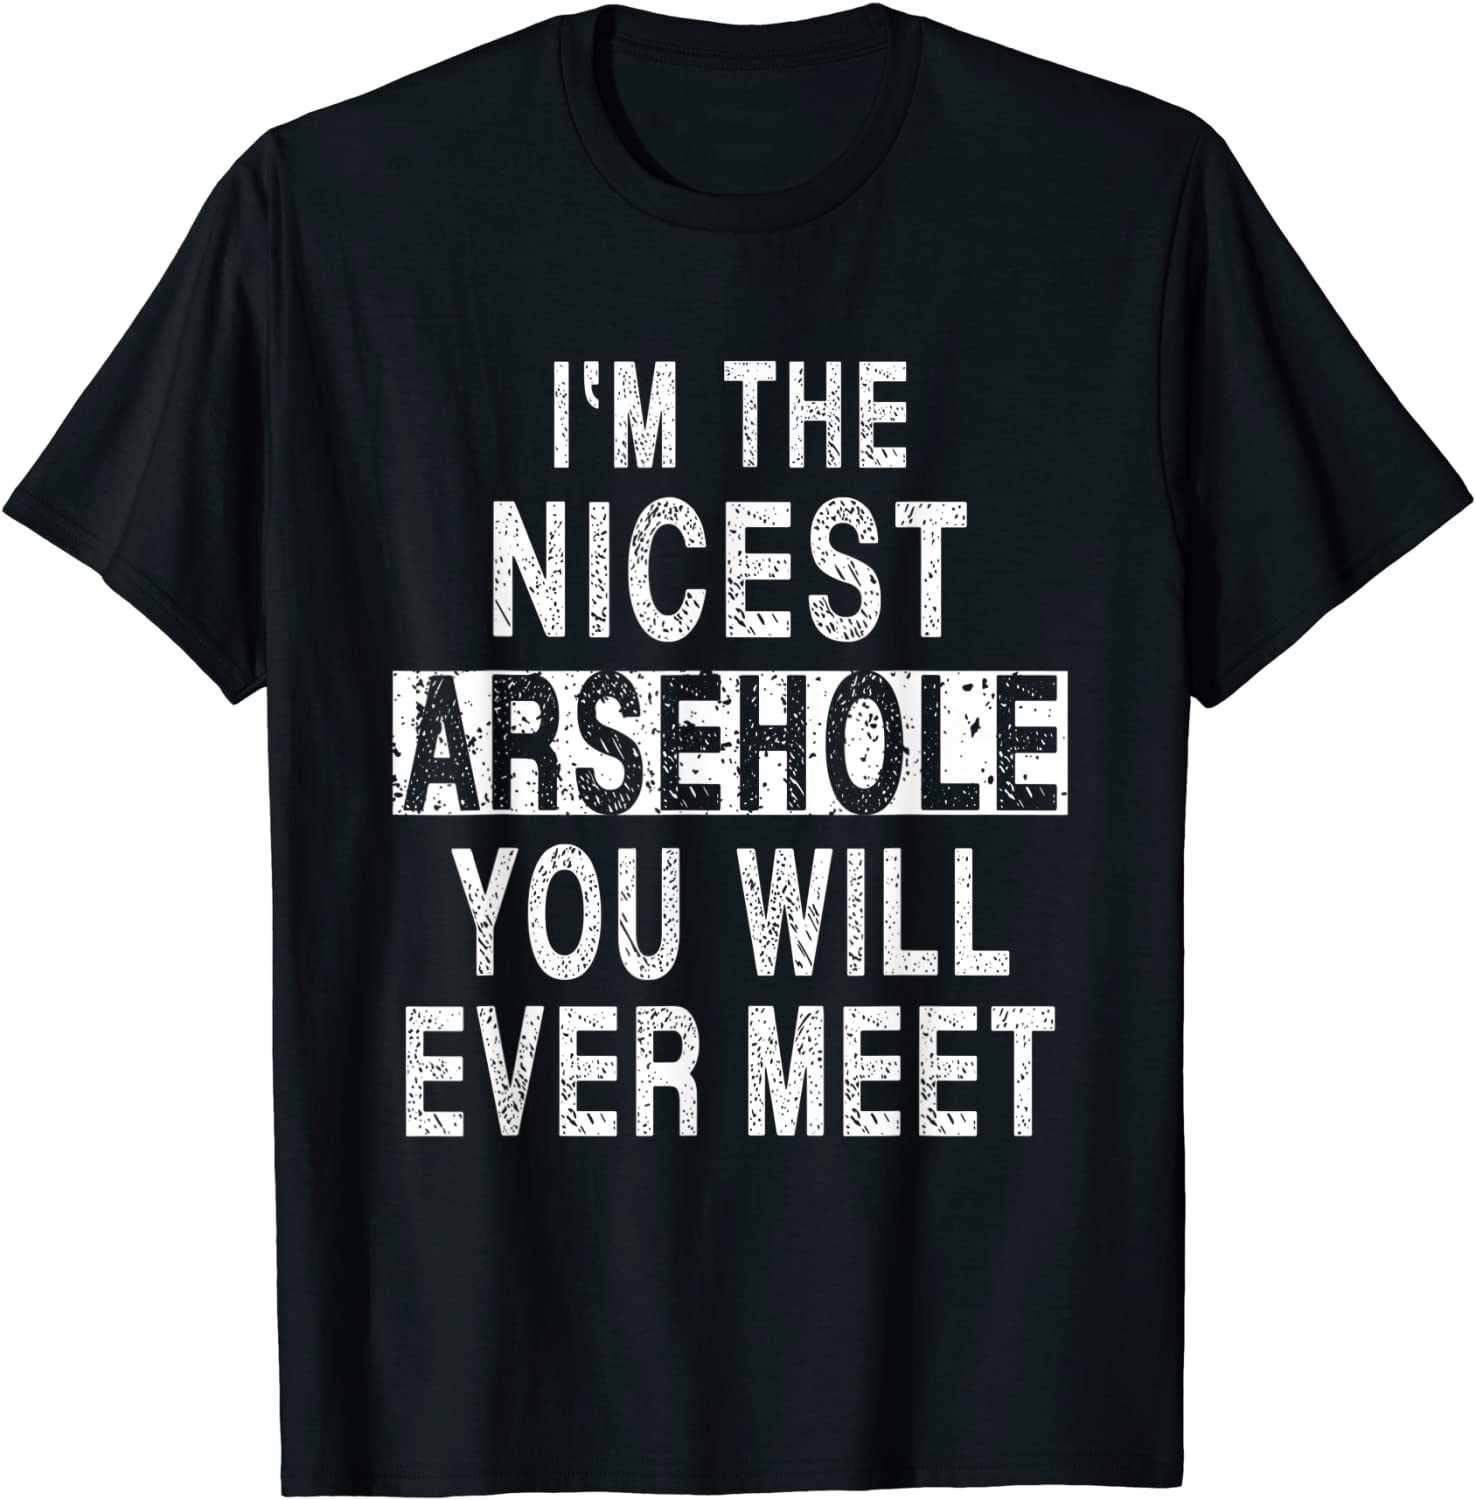 I'm The Nicest Arsehole You Will Ever Meet Tee Shirt - ShirtElephant Office